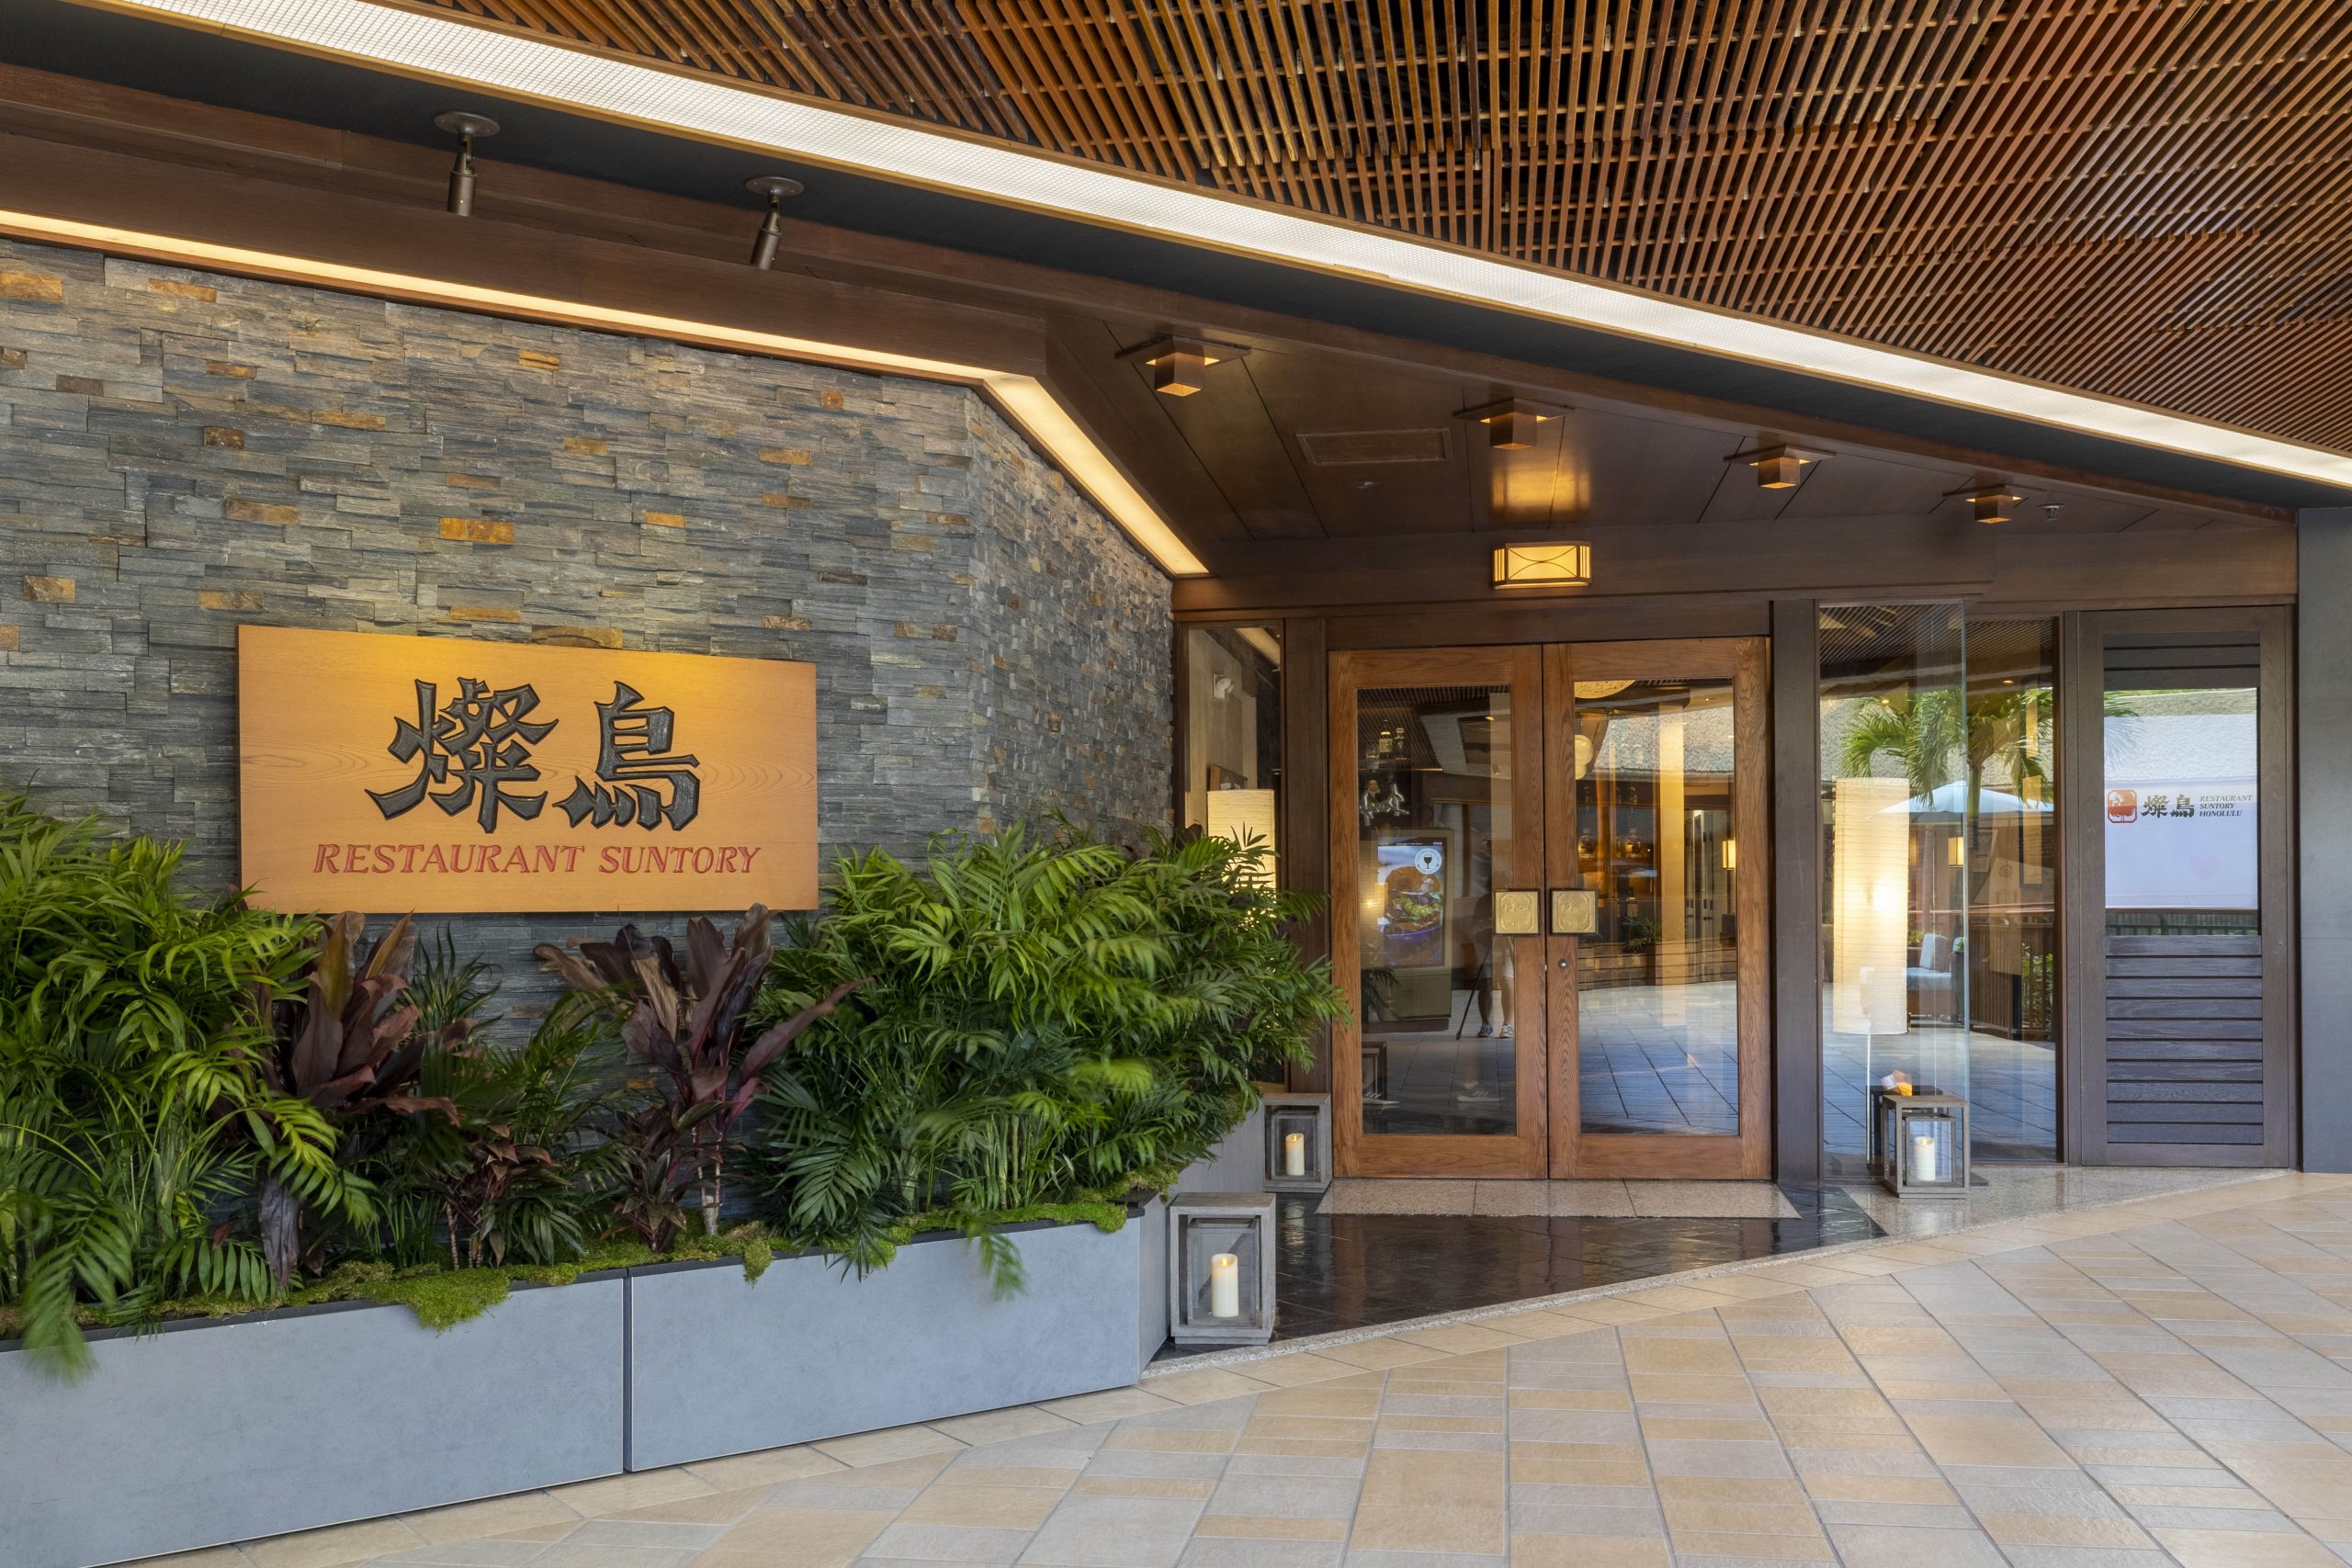 Restaurant Suntory Food Menu  Japanese Cuisine in Waikiki - Restaurant  Suntory Official Site